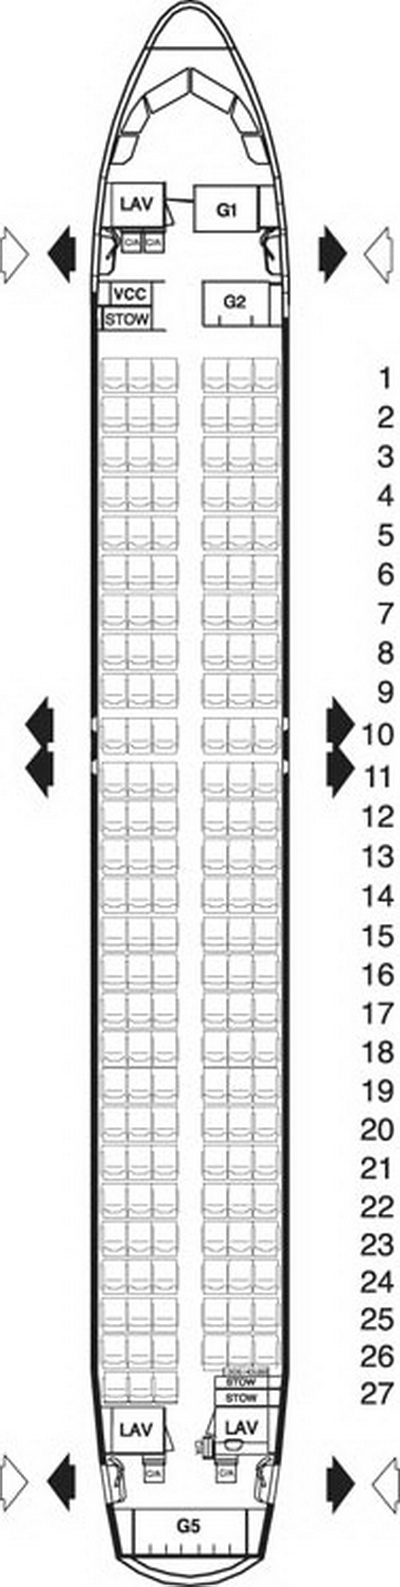 FINNAIR AIRLINES AIRBUS A320 AIRCRAFT SEATING CHART